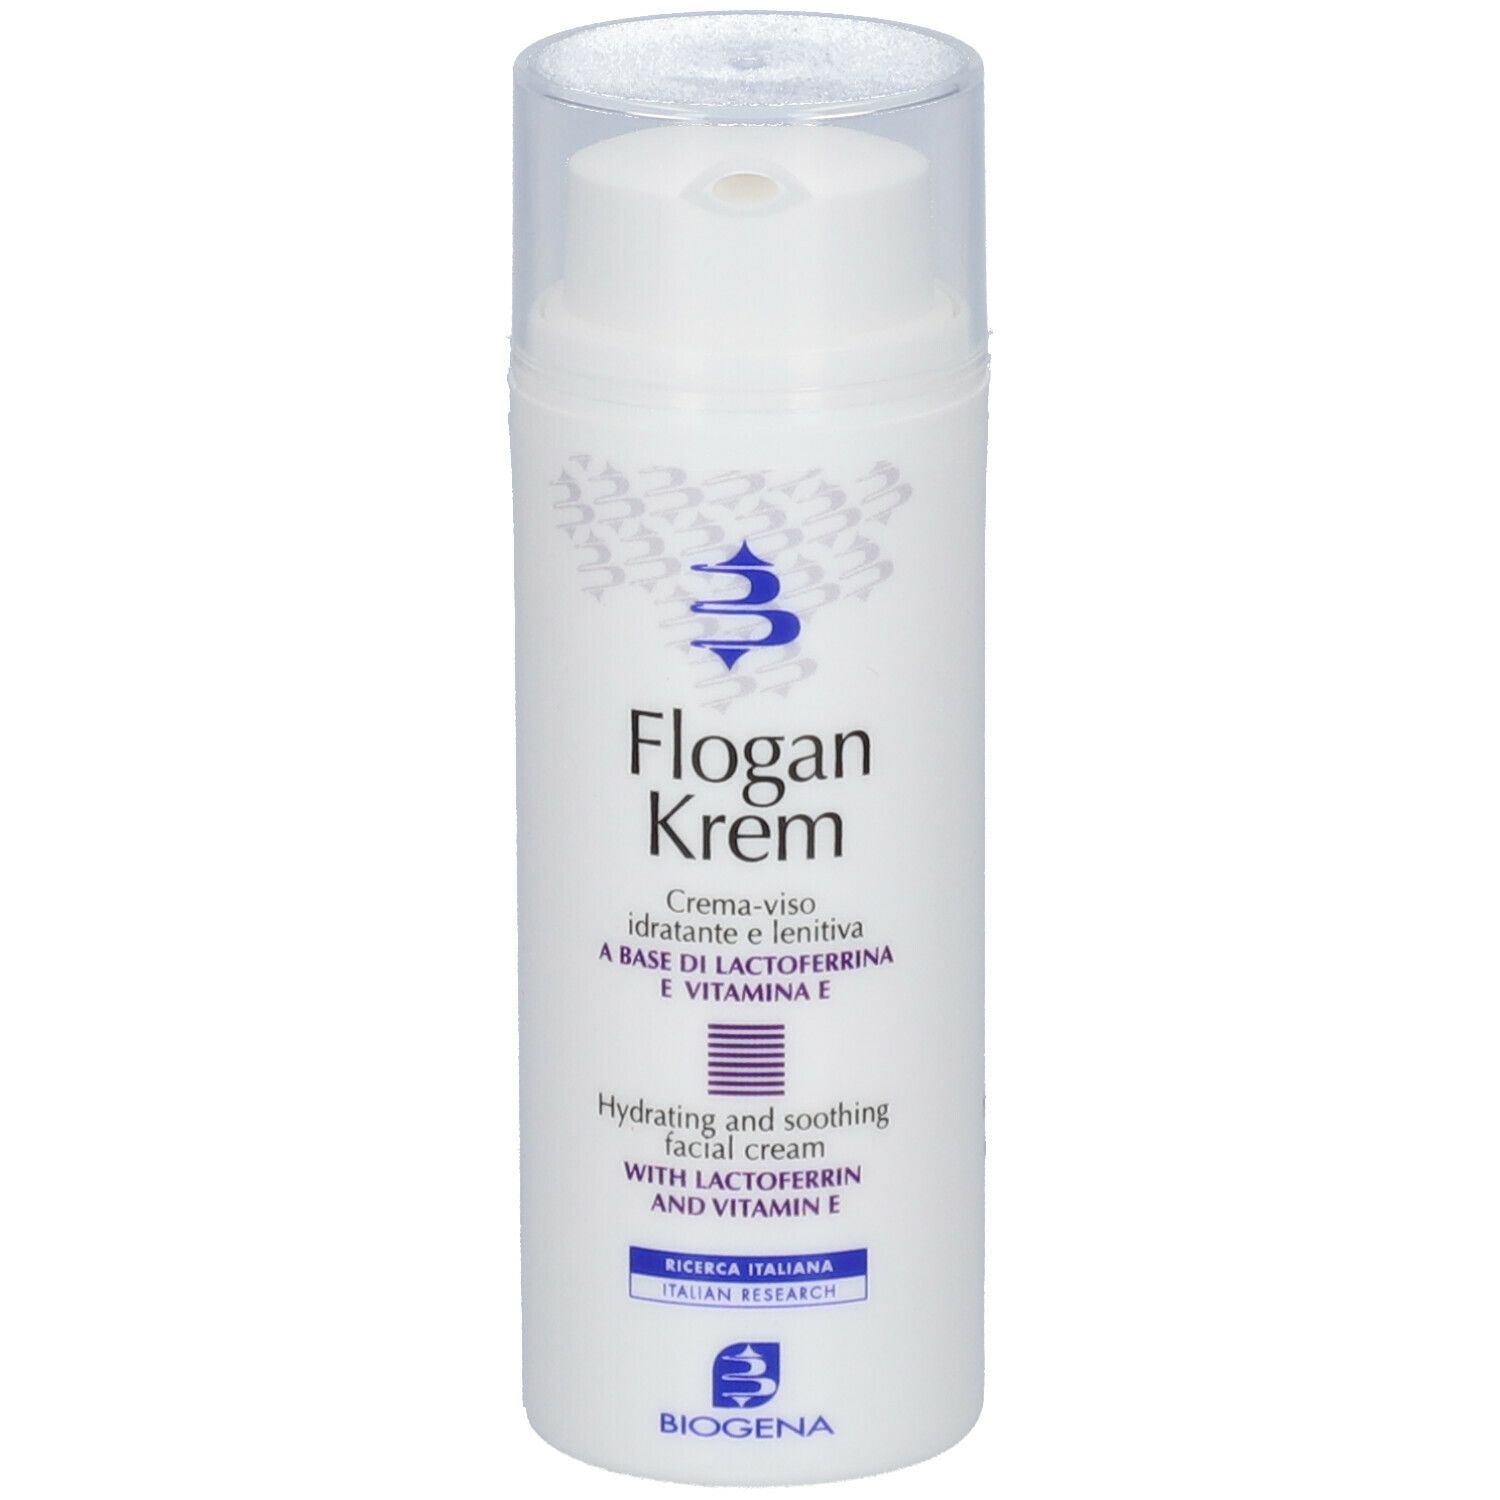 Biogena Flogan Krem Crème visage hydratante et apaisante